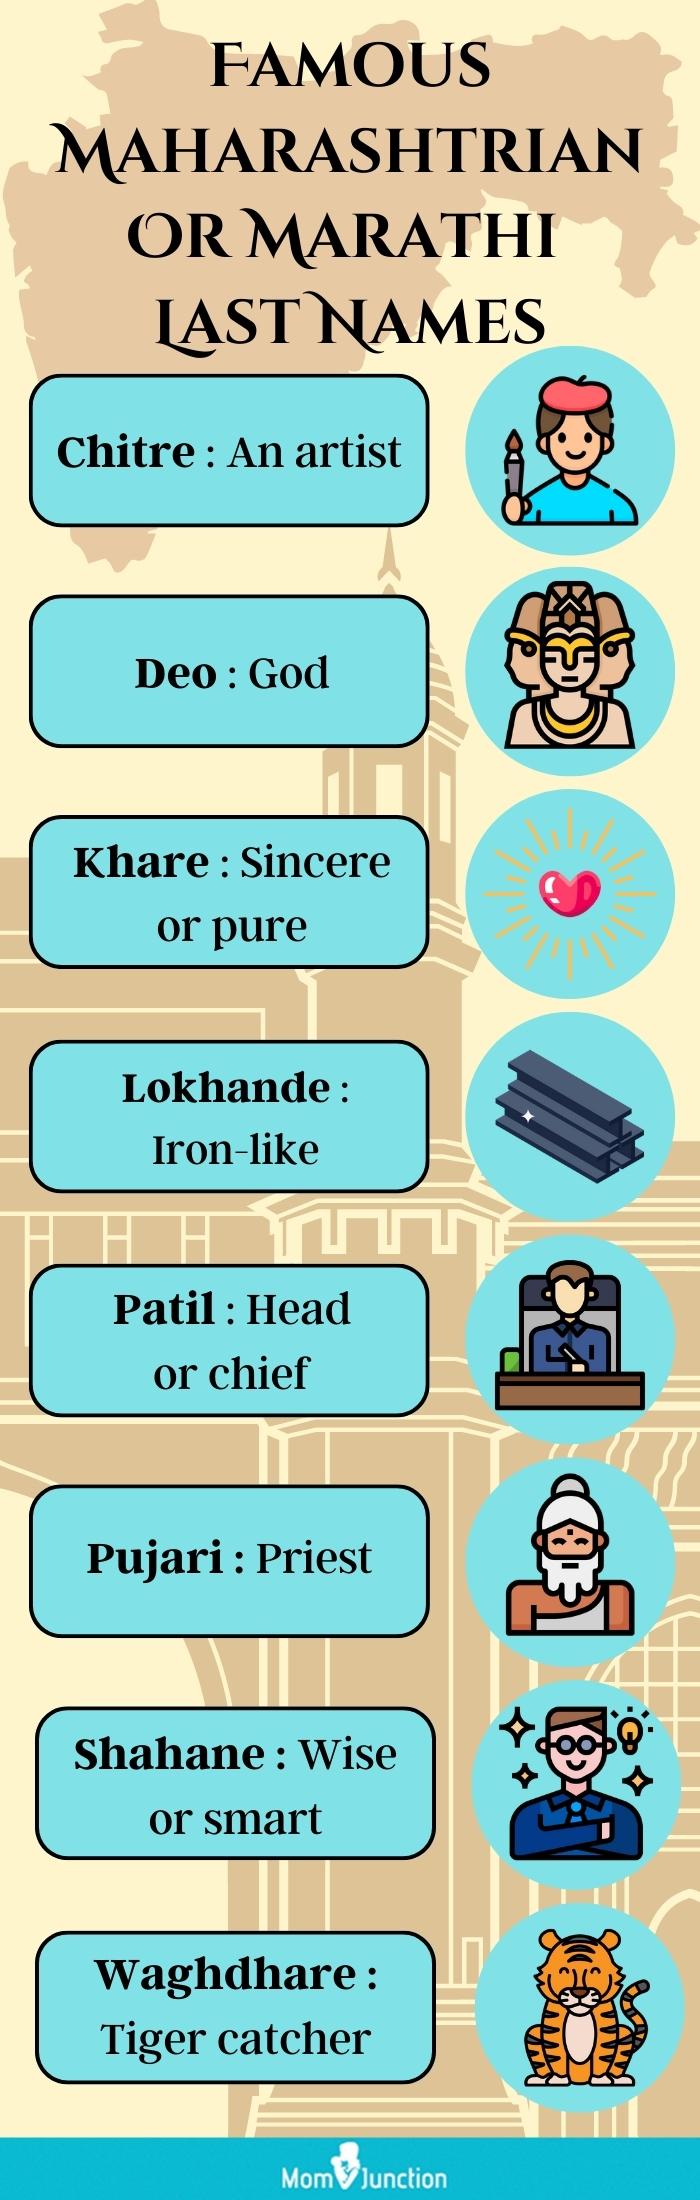 marathi last names (infographic)